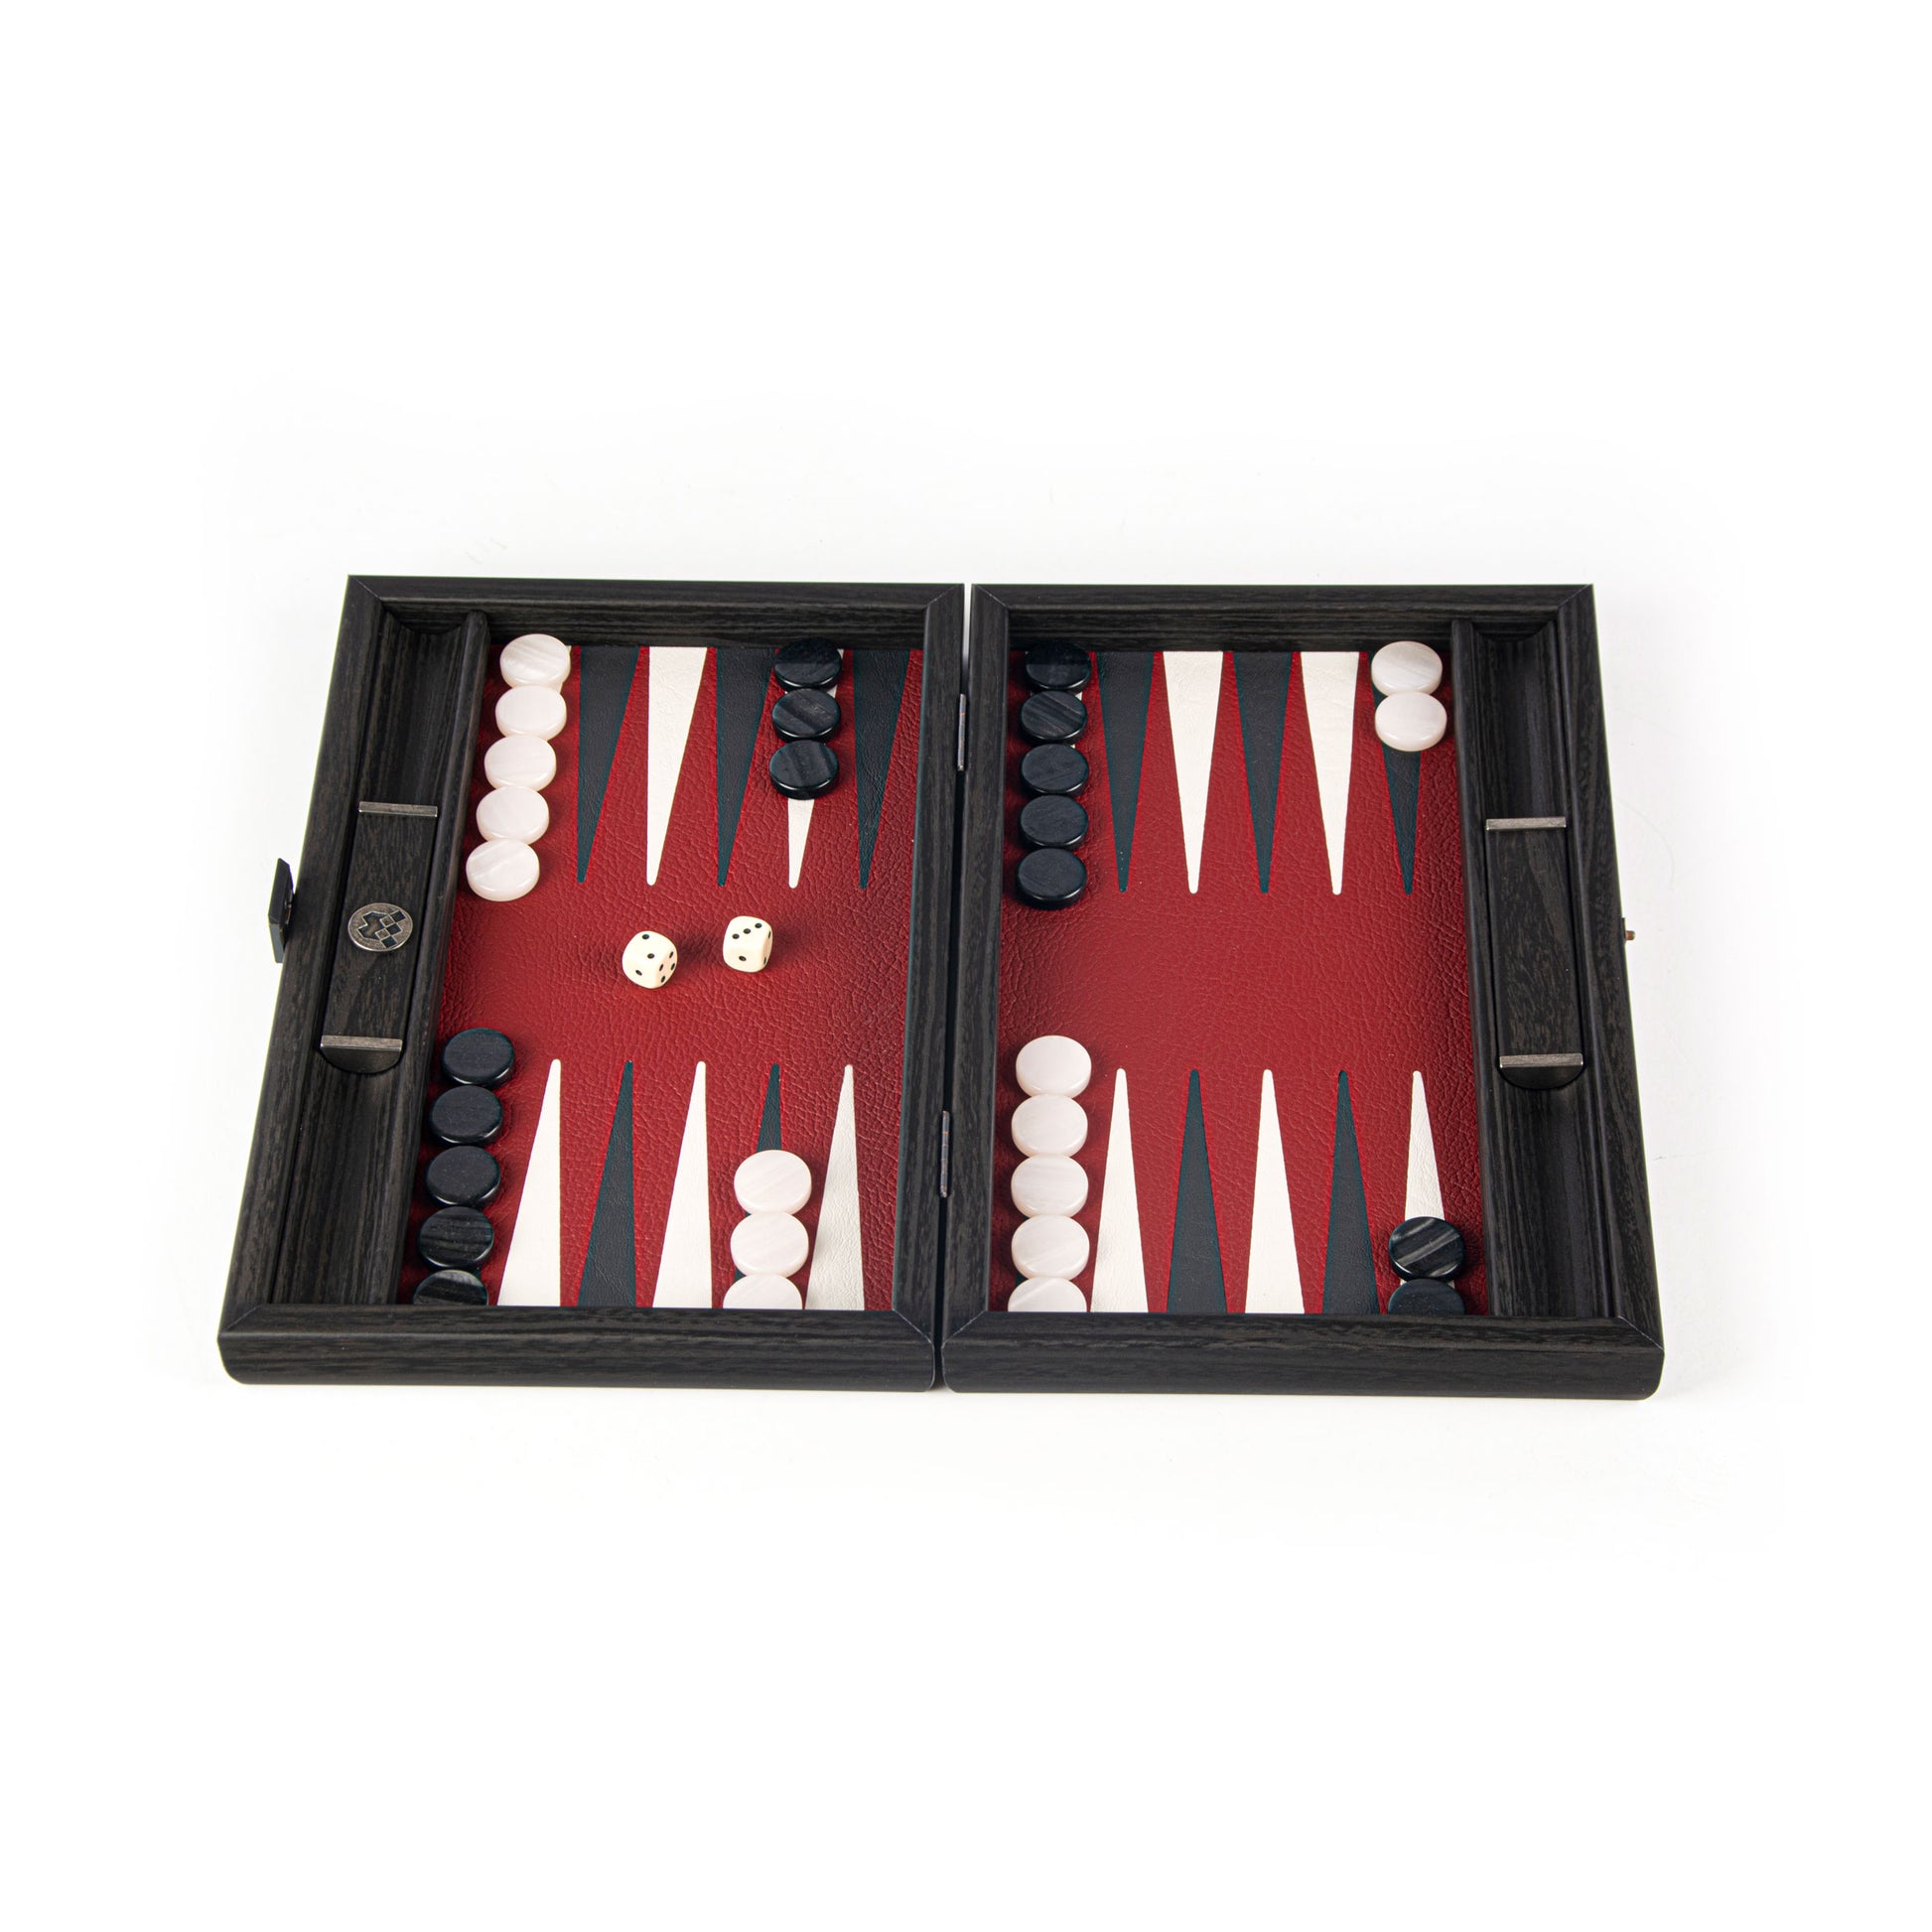 BURGUNDY RED Backgammon (Travel size) - Premium Backgammon from MANOPOULOS Chess & Backgammon - Just €119! Shop now at MANOPOULOS Chess & Backgammon